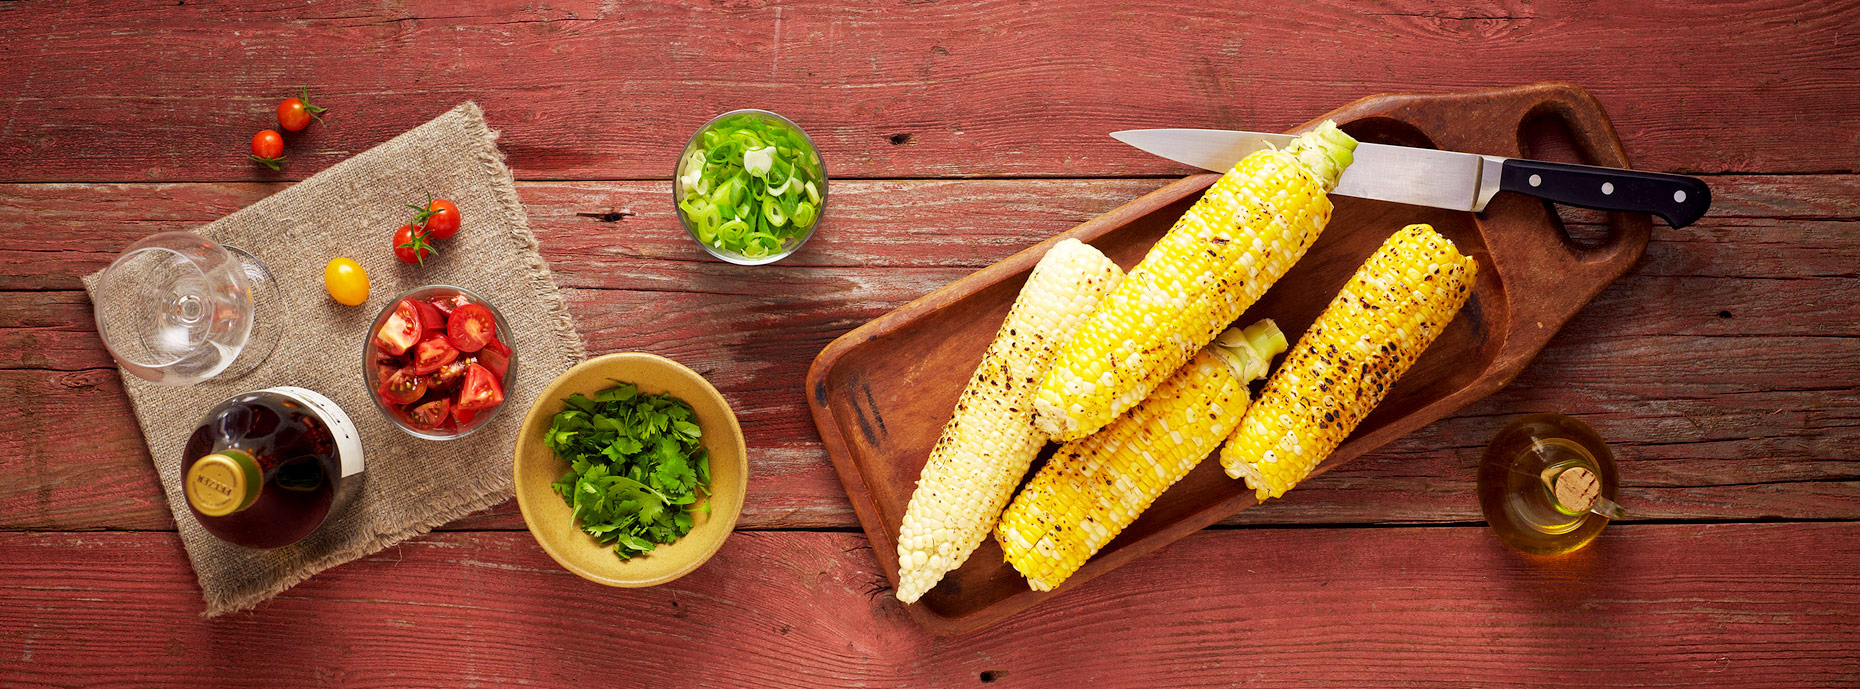 AlanCampbellPhotography, Grilled-Corn-Salad-ingredients